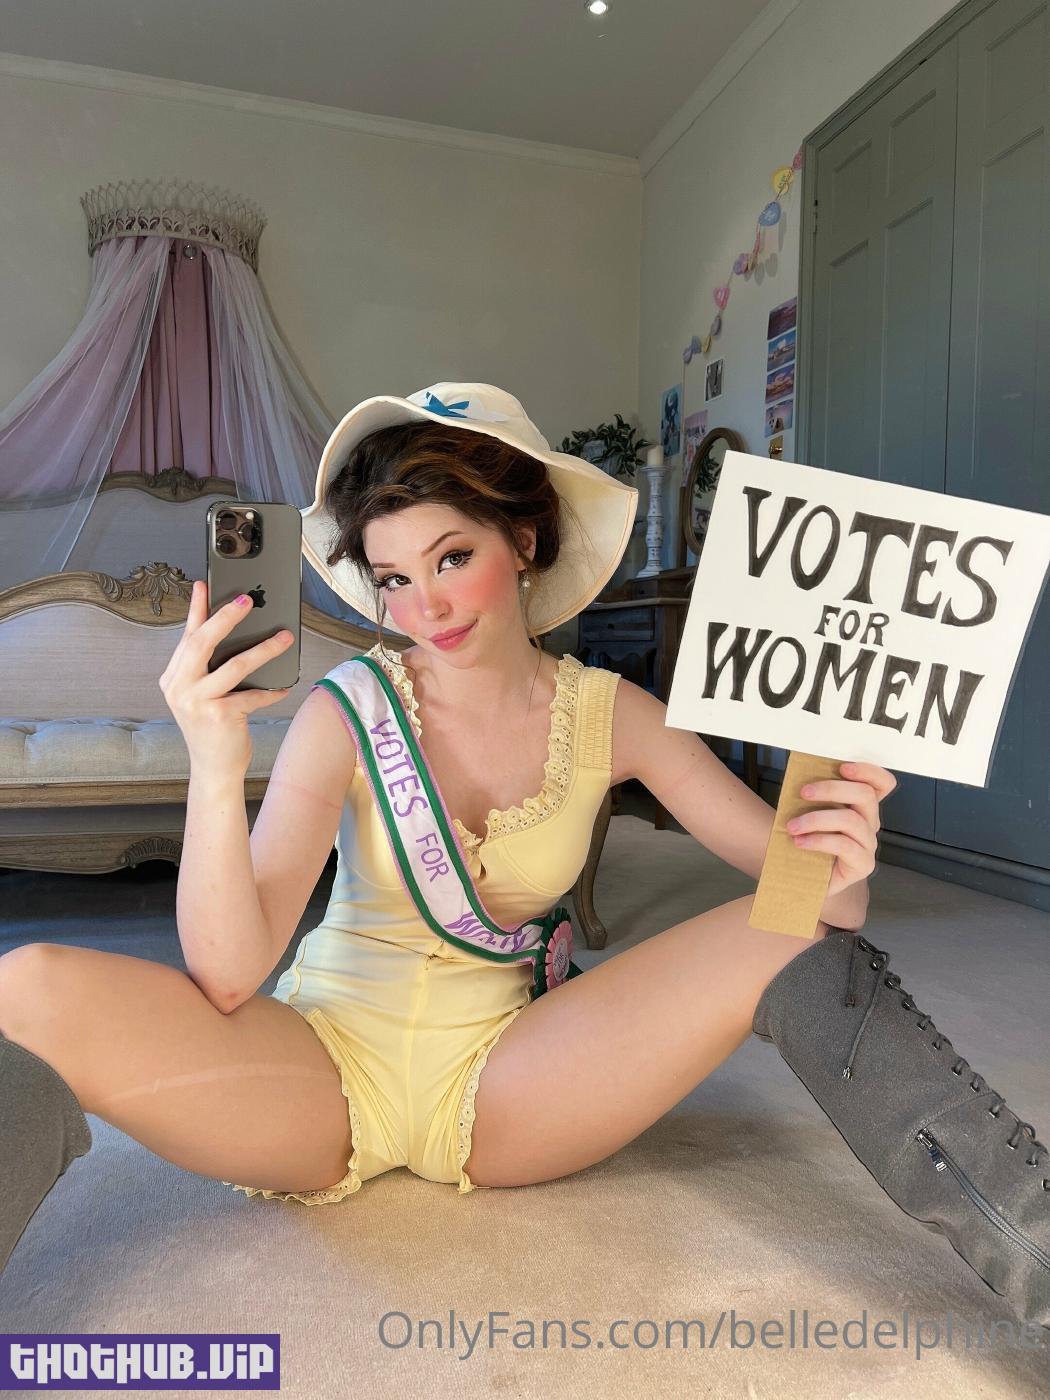 1662745847 558 Belle Delphine Votes For Women Onlyfans Set Leaked